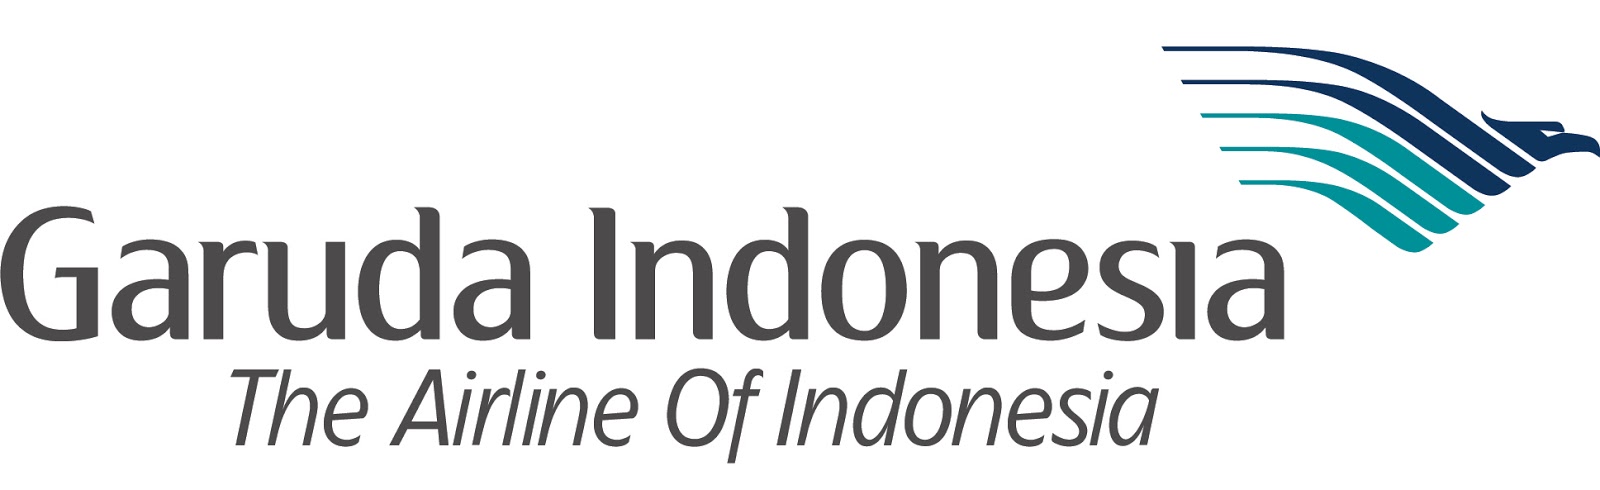 GARUDA INDONESIA Logo photo - 1